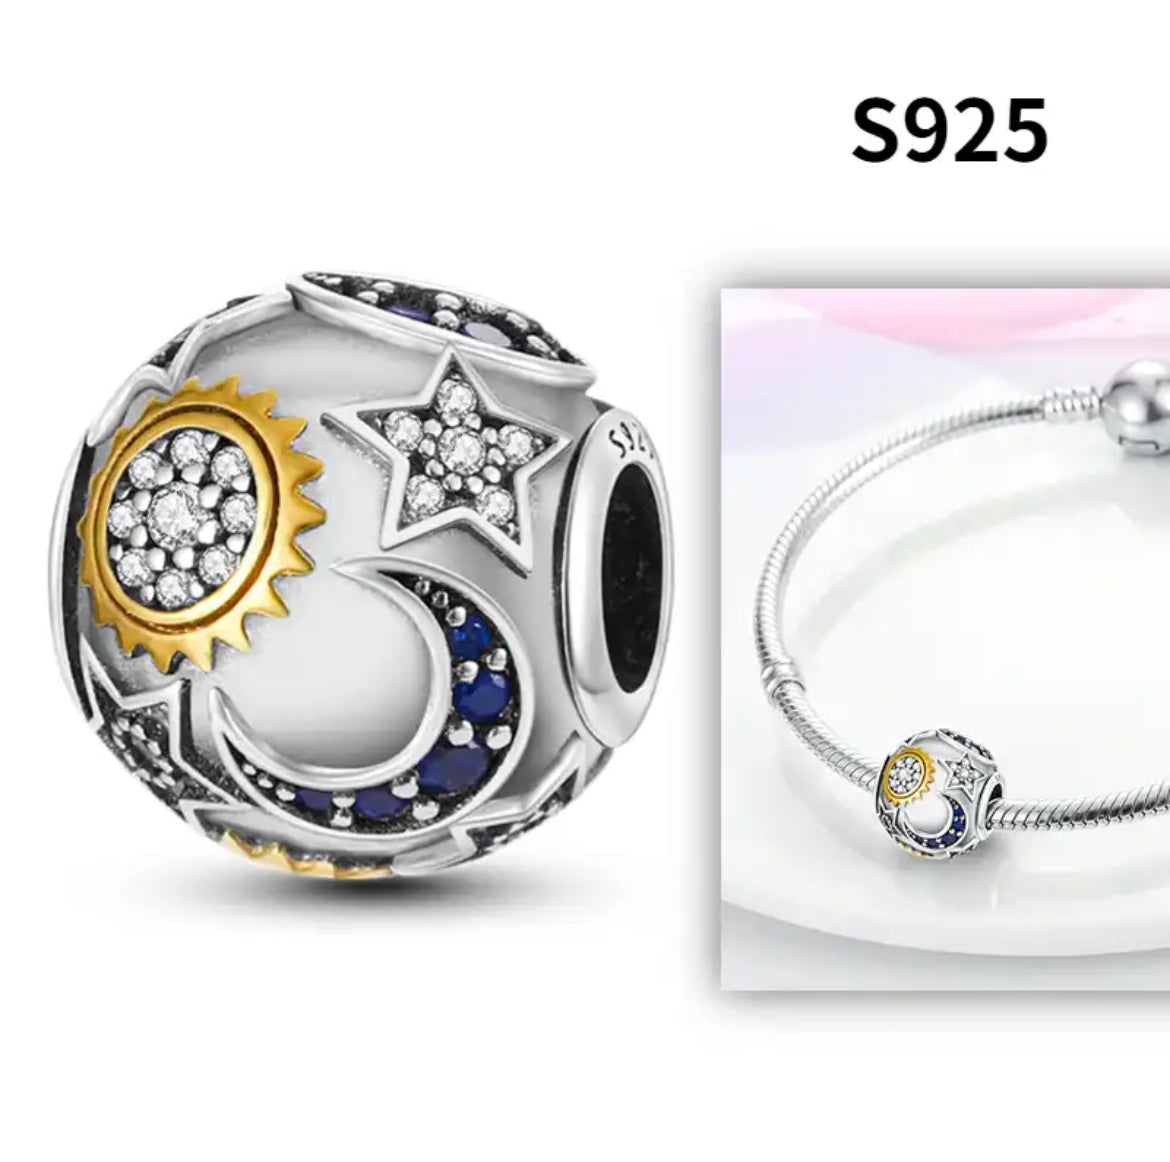 Spiritual Charm Bracelet-Sterling Silver 925